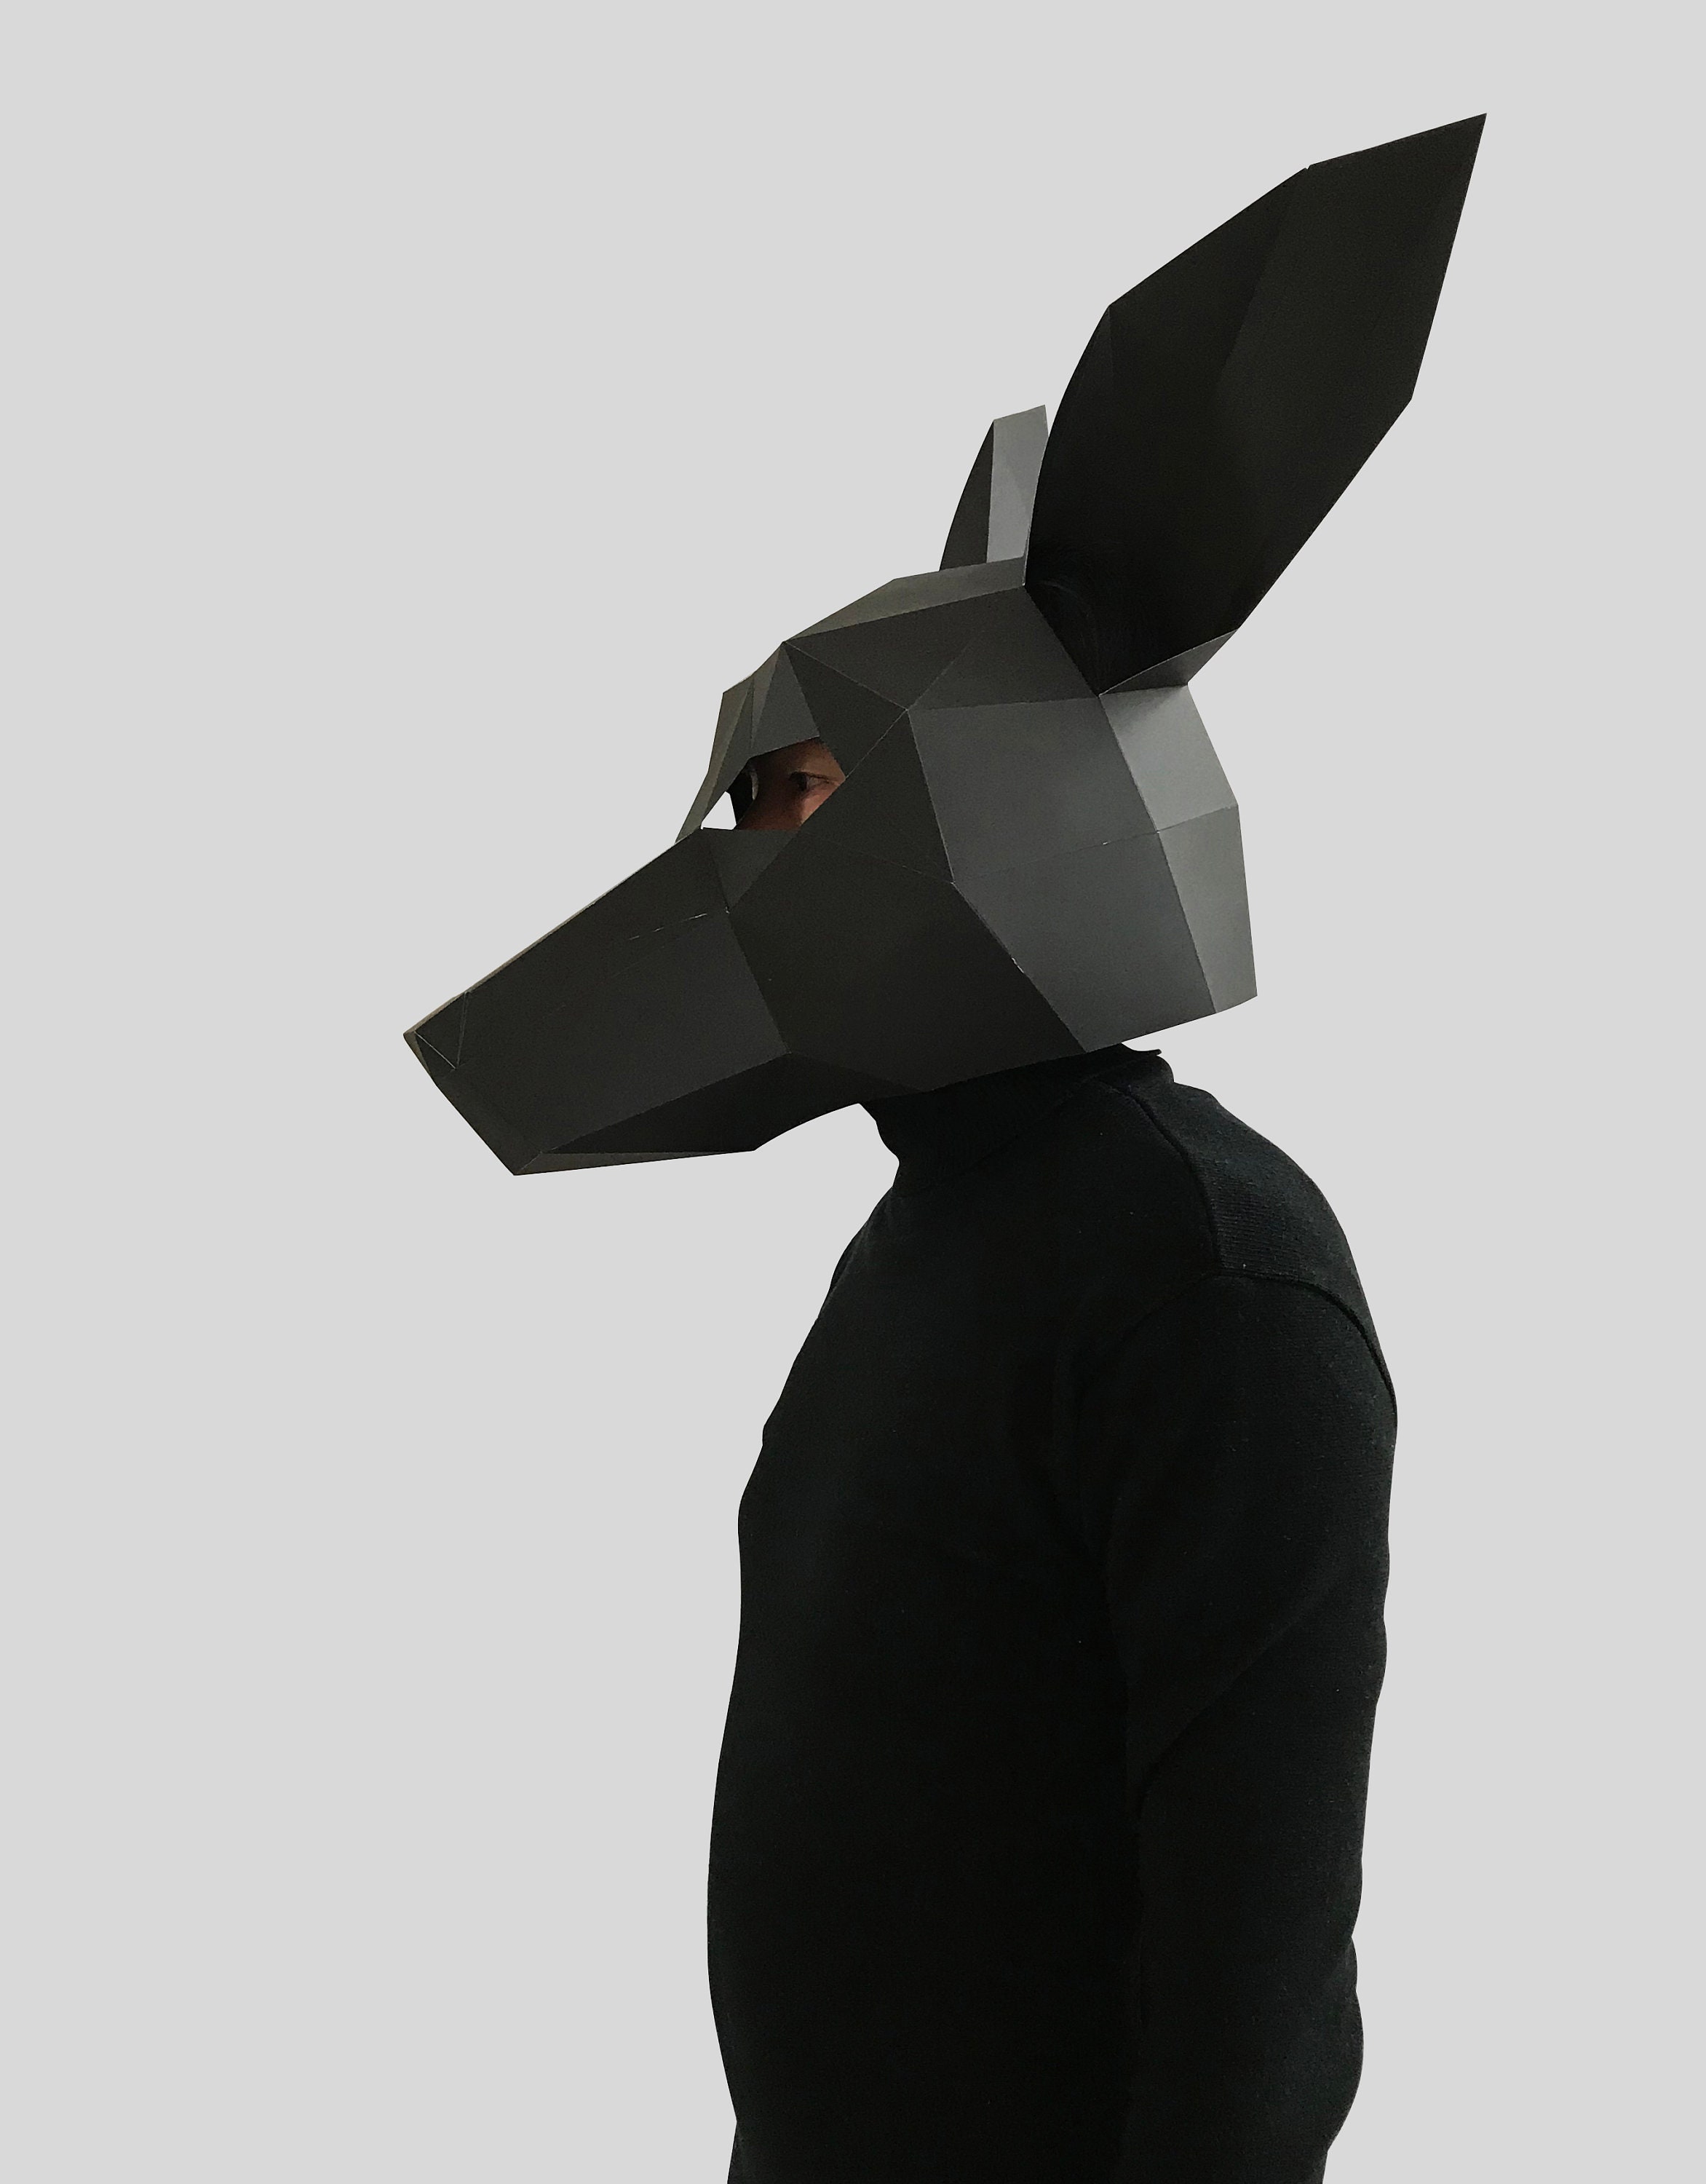 Kangaroo Mouse Mask Template Paper Mask Papercraft Mask | Etsy